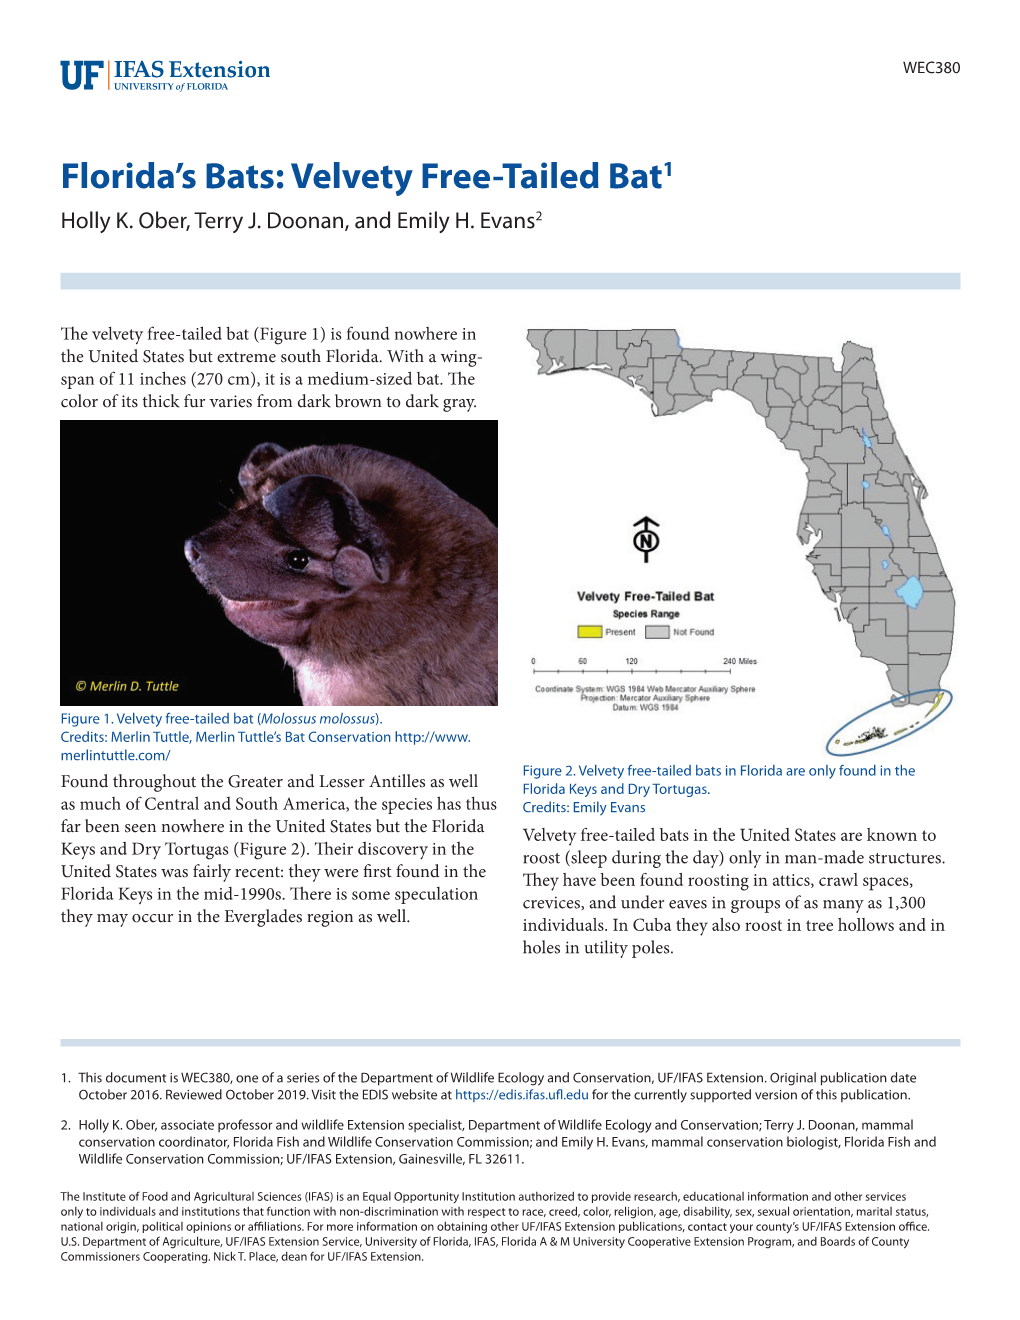 Florida's Bats: Velvety Free-Tailed Bat1